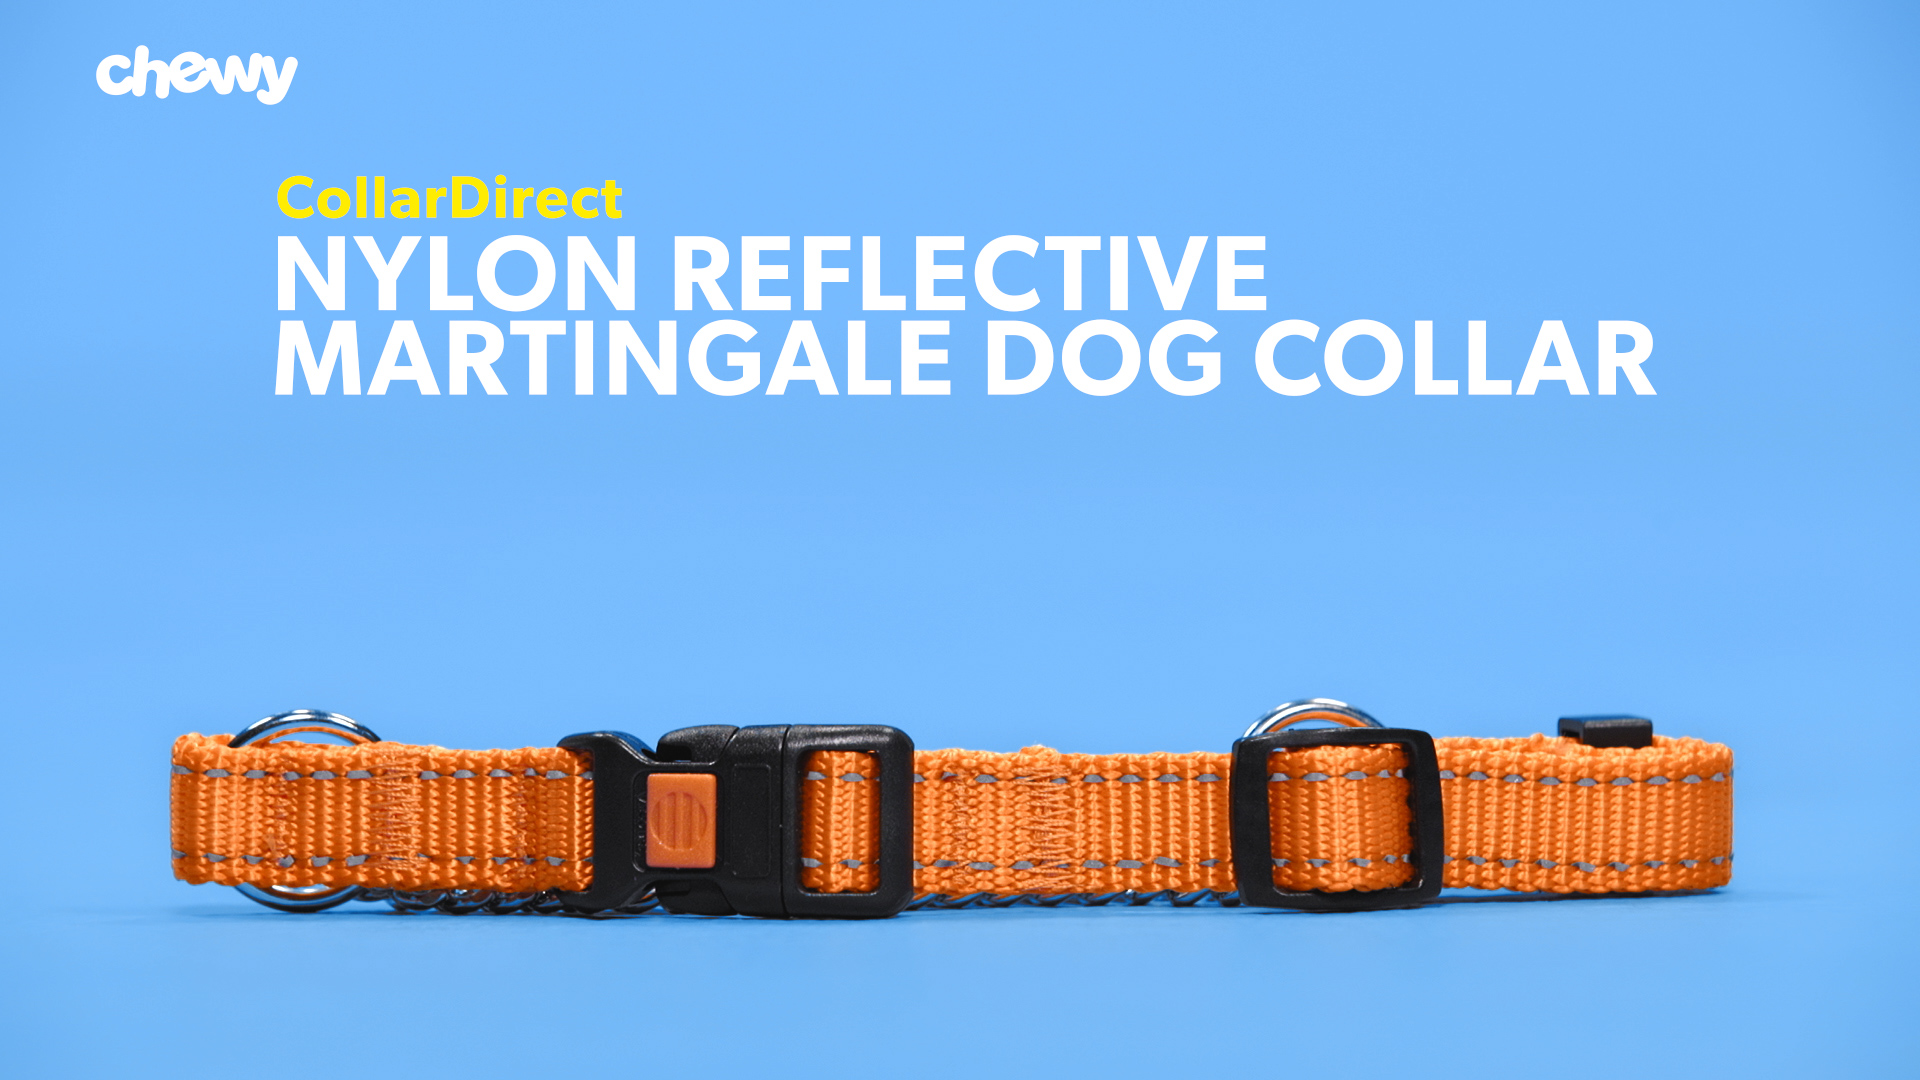 CollarDirect Reflective Martingale Dog Collar Nylon Heavy Duty Training Pet Collars for Small Medium Large Dogs Puppy Pink Orange Black Blue